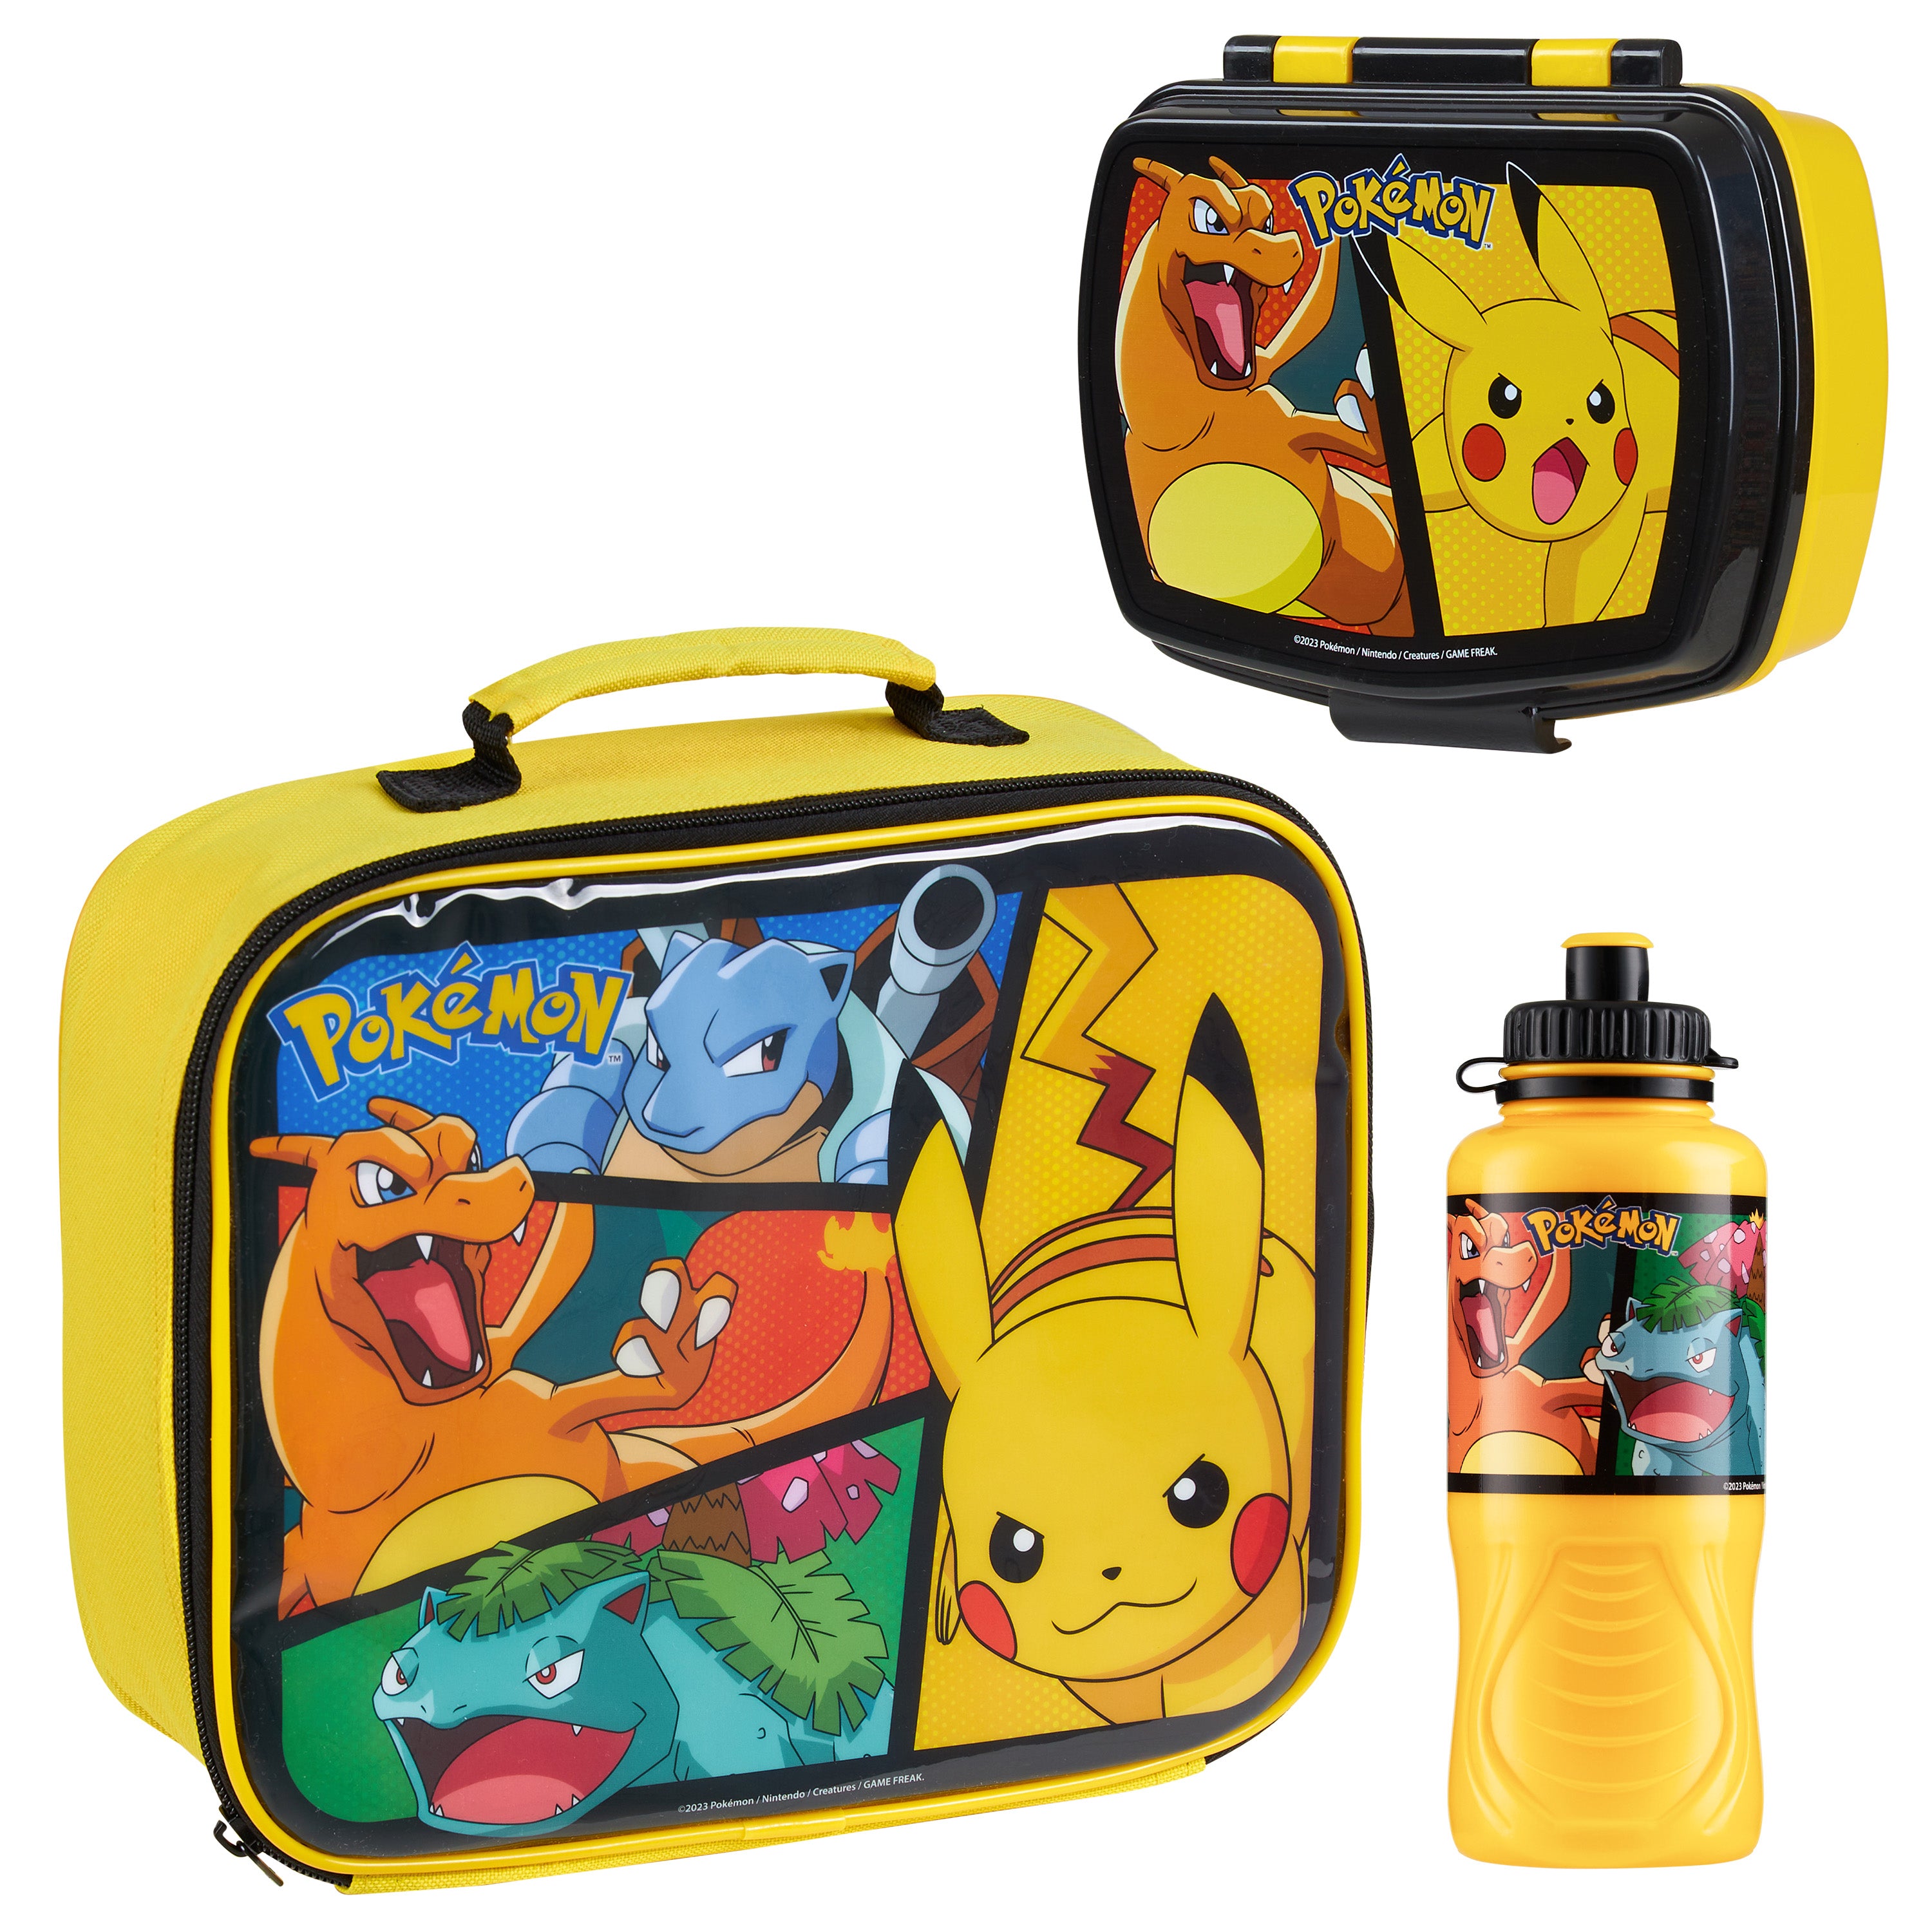 Pokémon: Antibacterial Lunch Box - Poké Days - Pikachu - 550ml